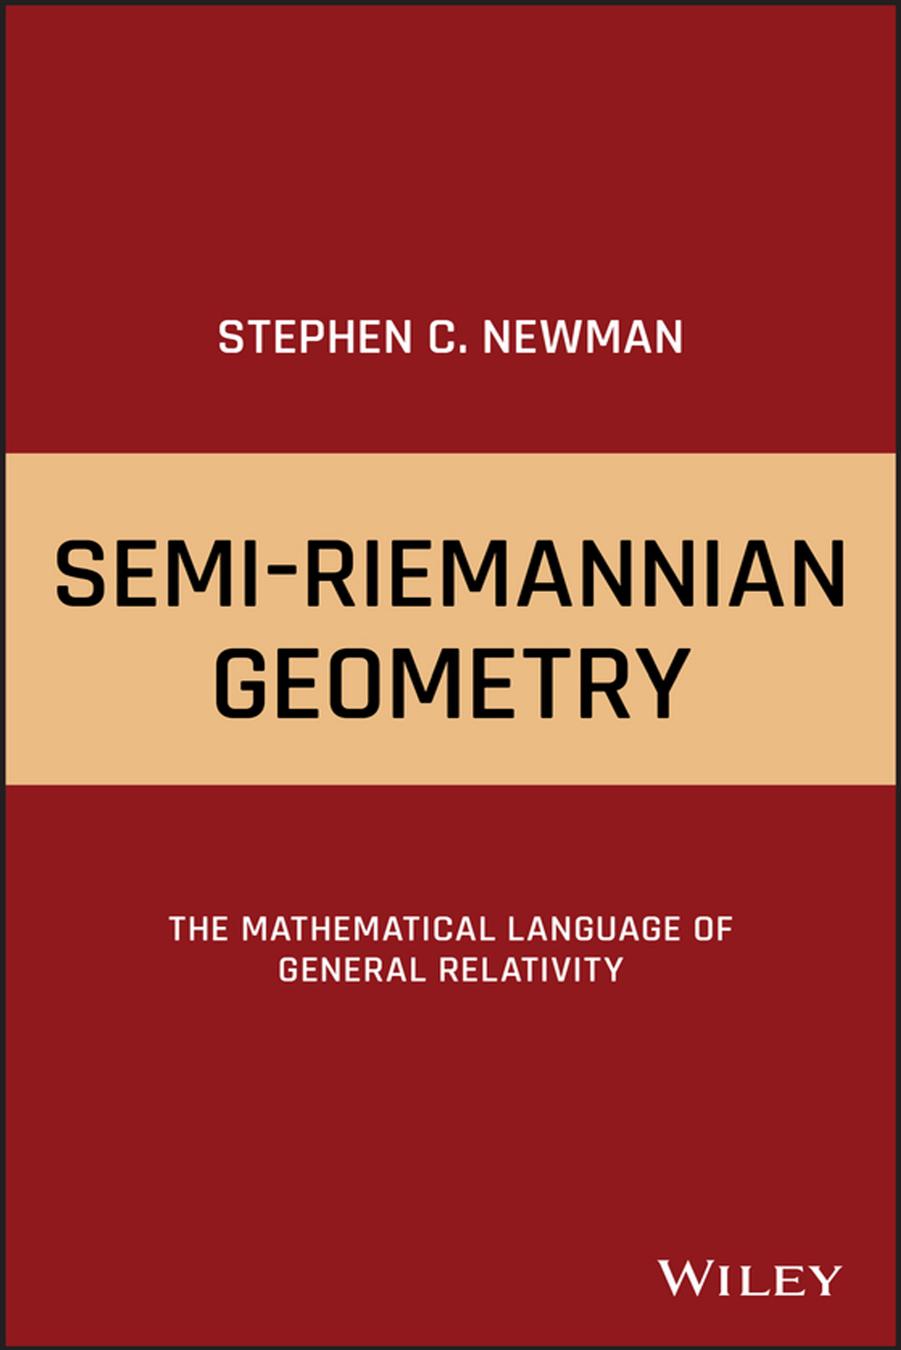 Semi-Riemannian Geometry: The Mathematical Language of General Relativity